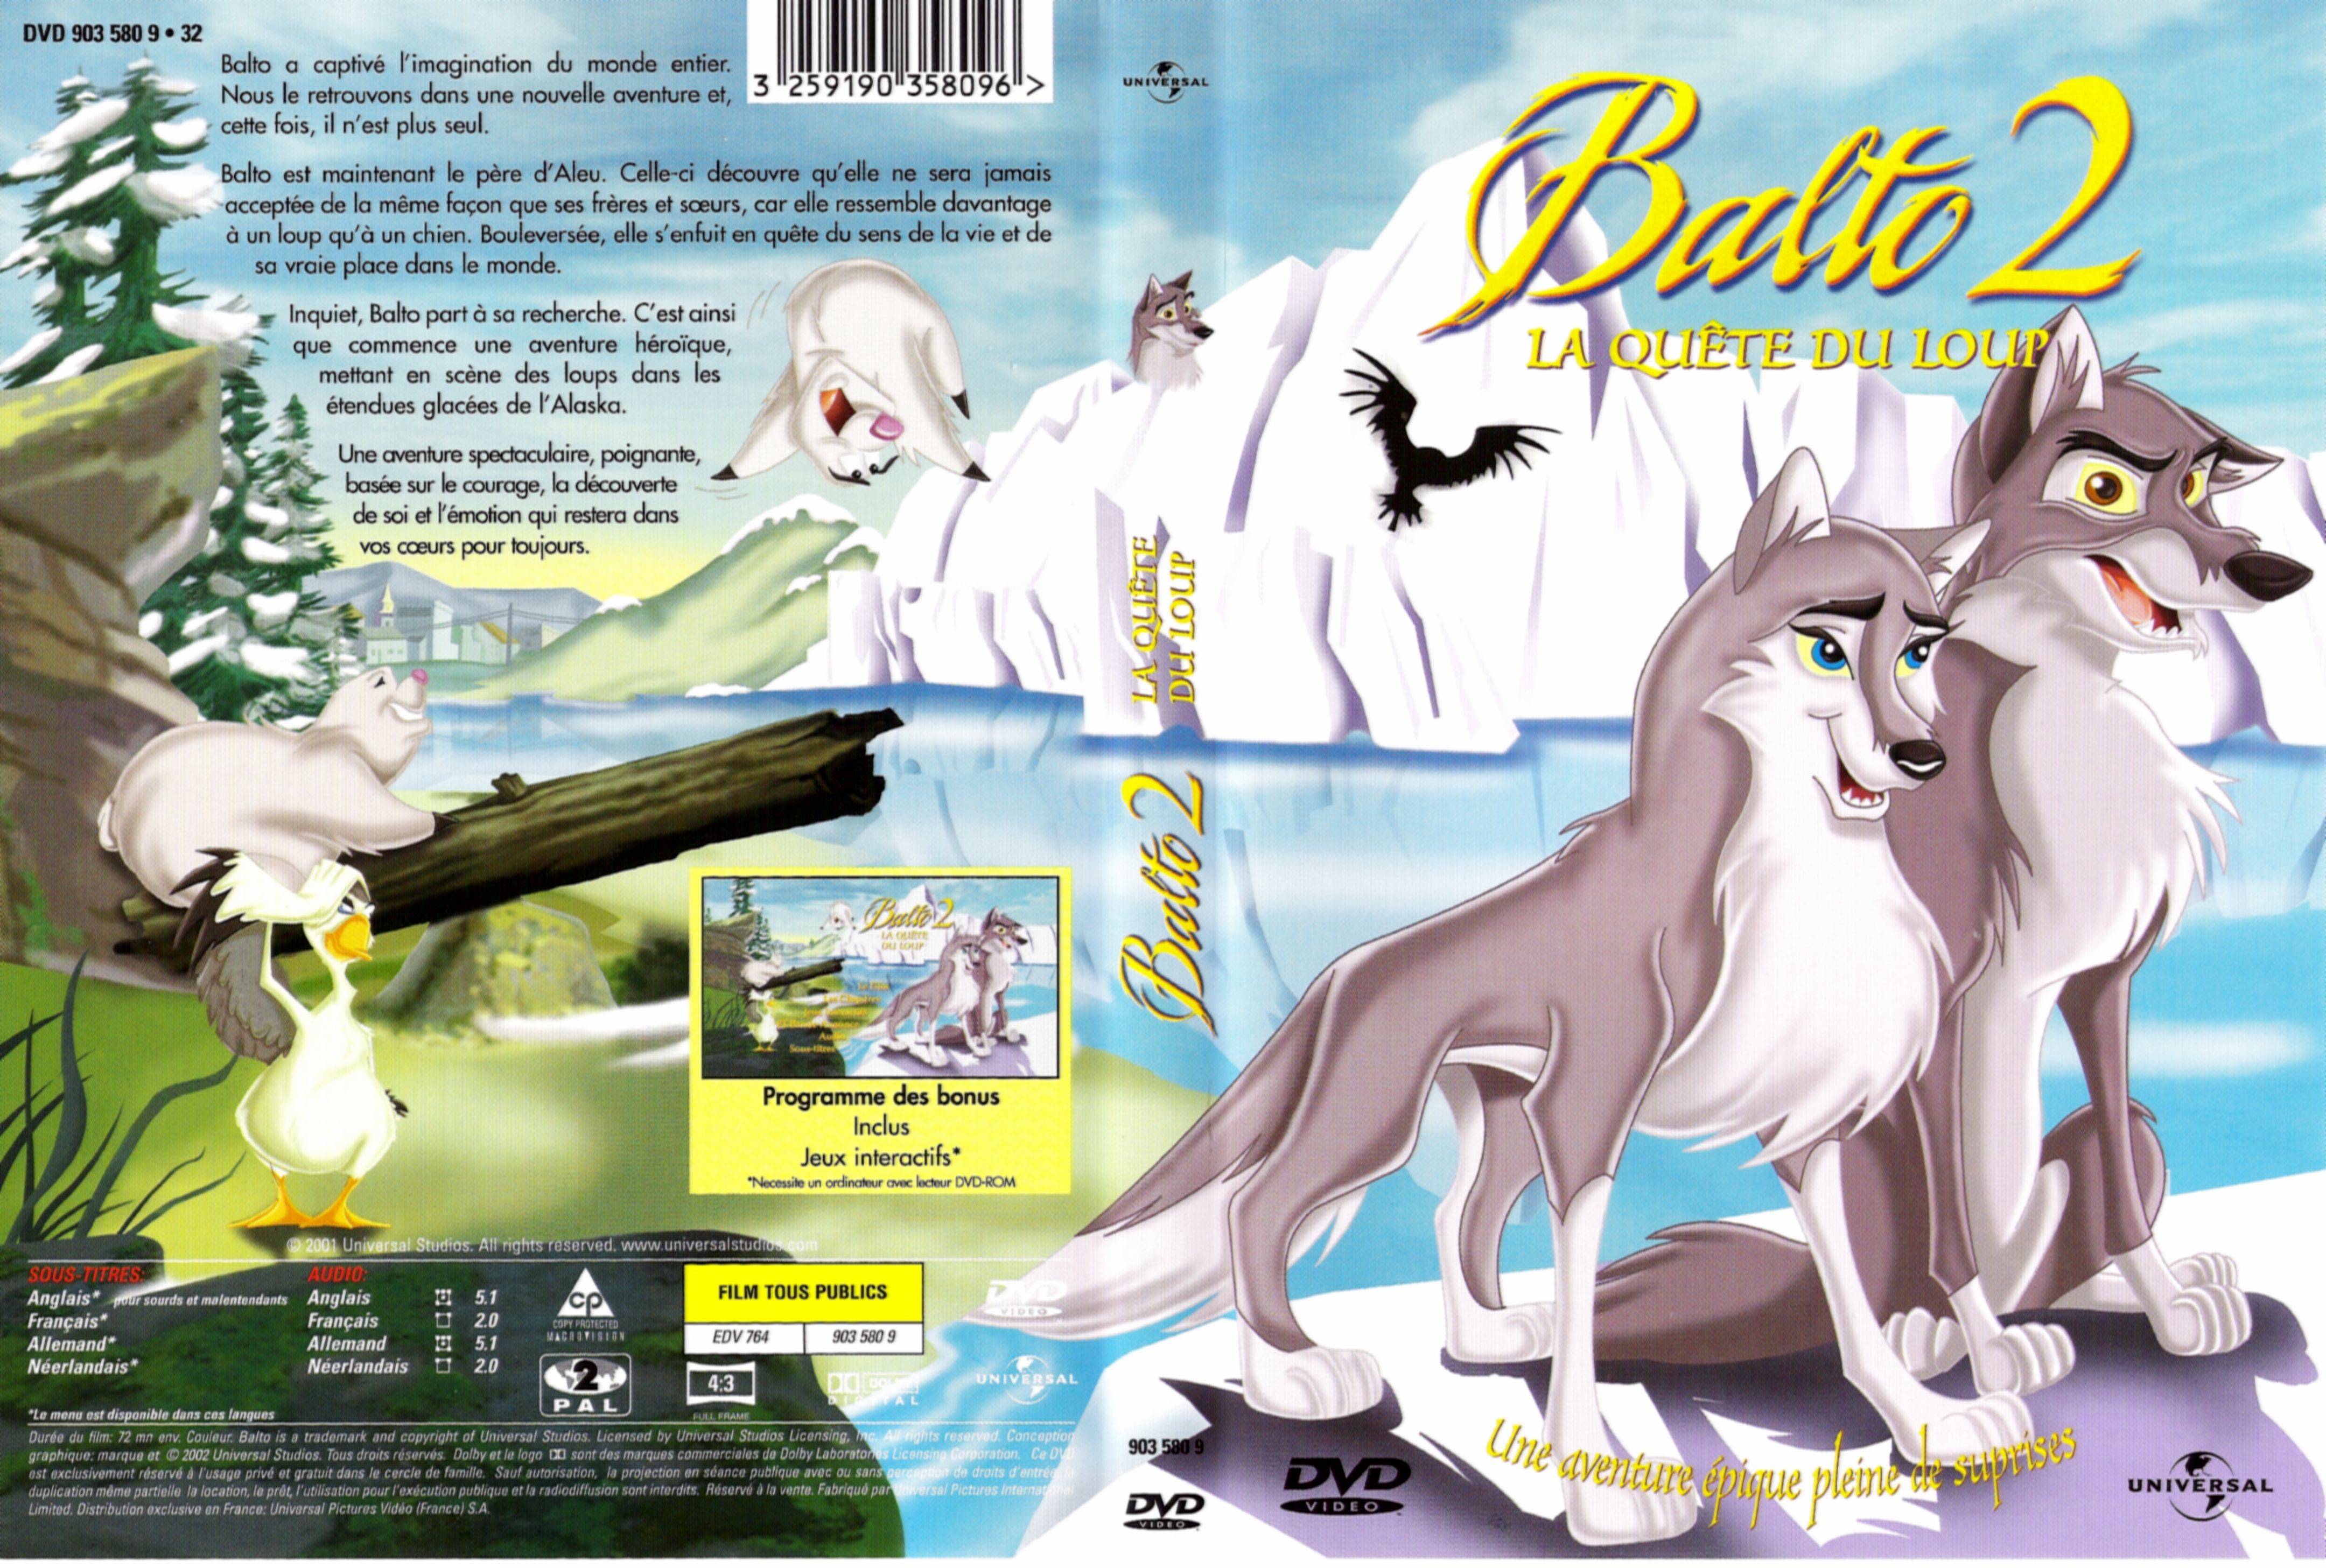 Jaquette DVD Balto 2